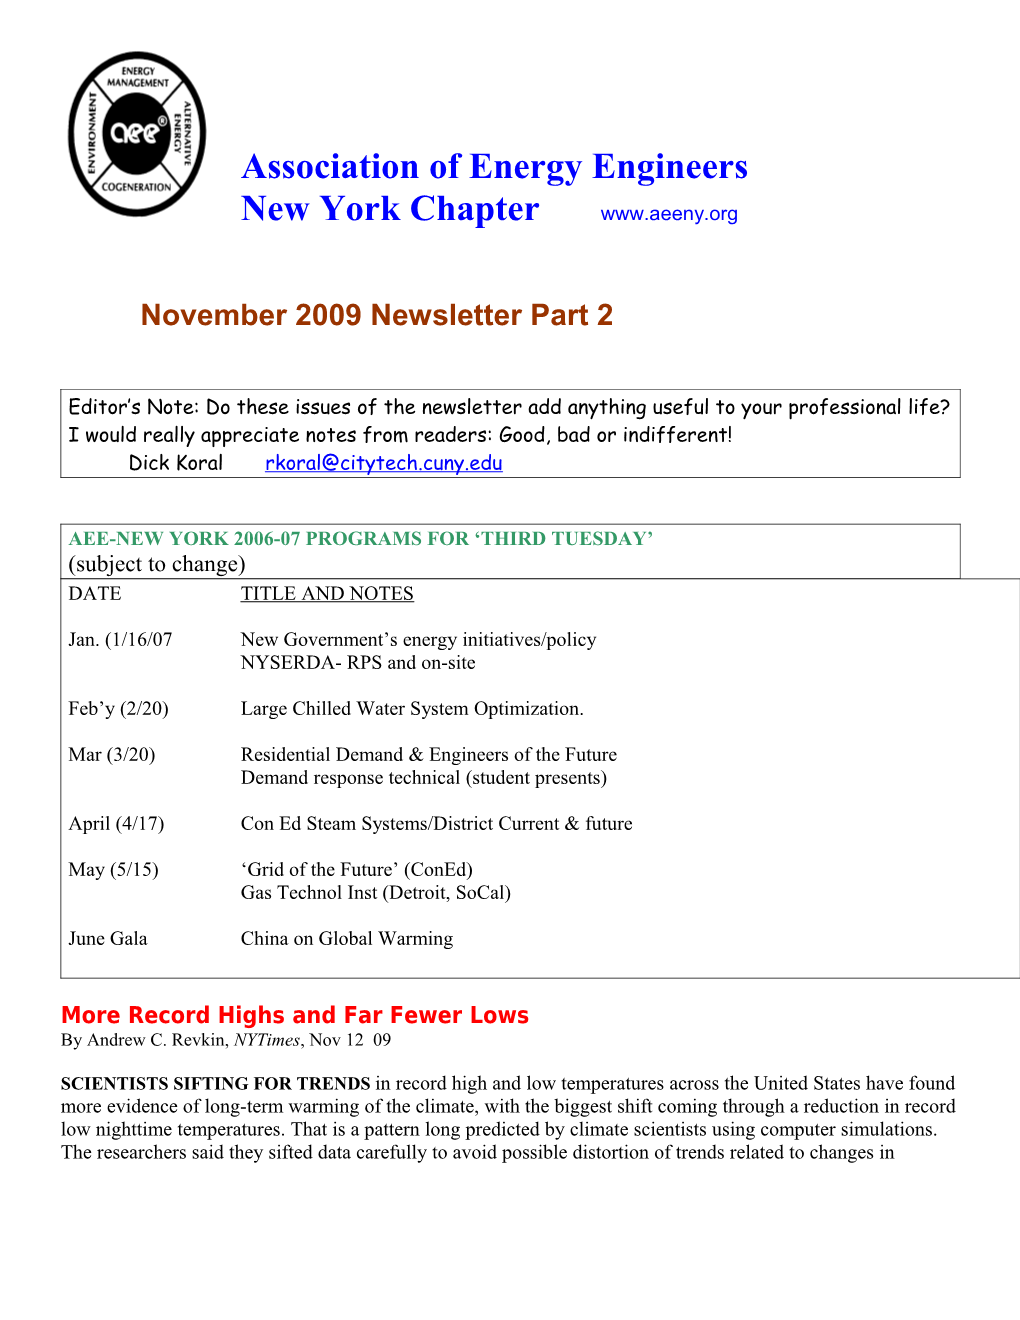 Association of Energy Engineers s1